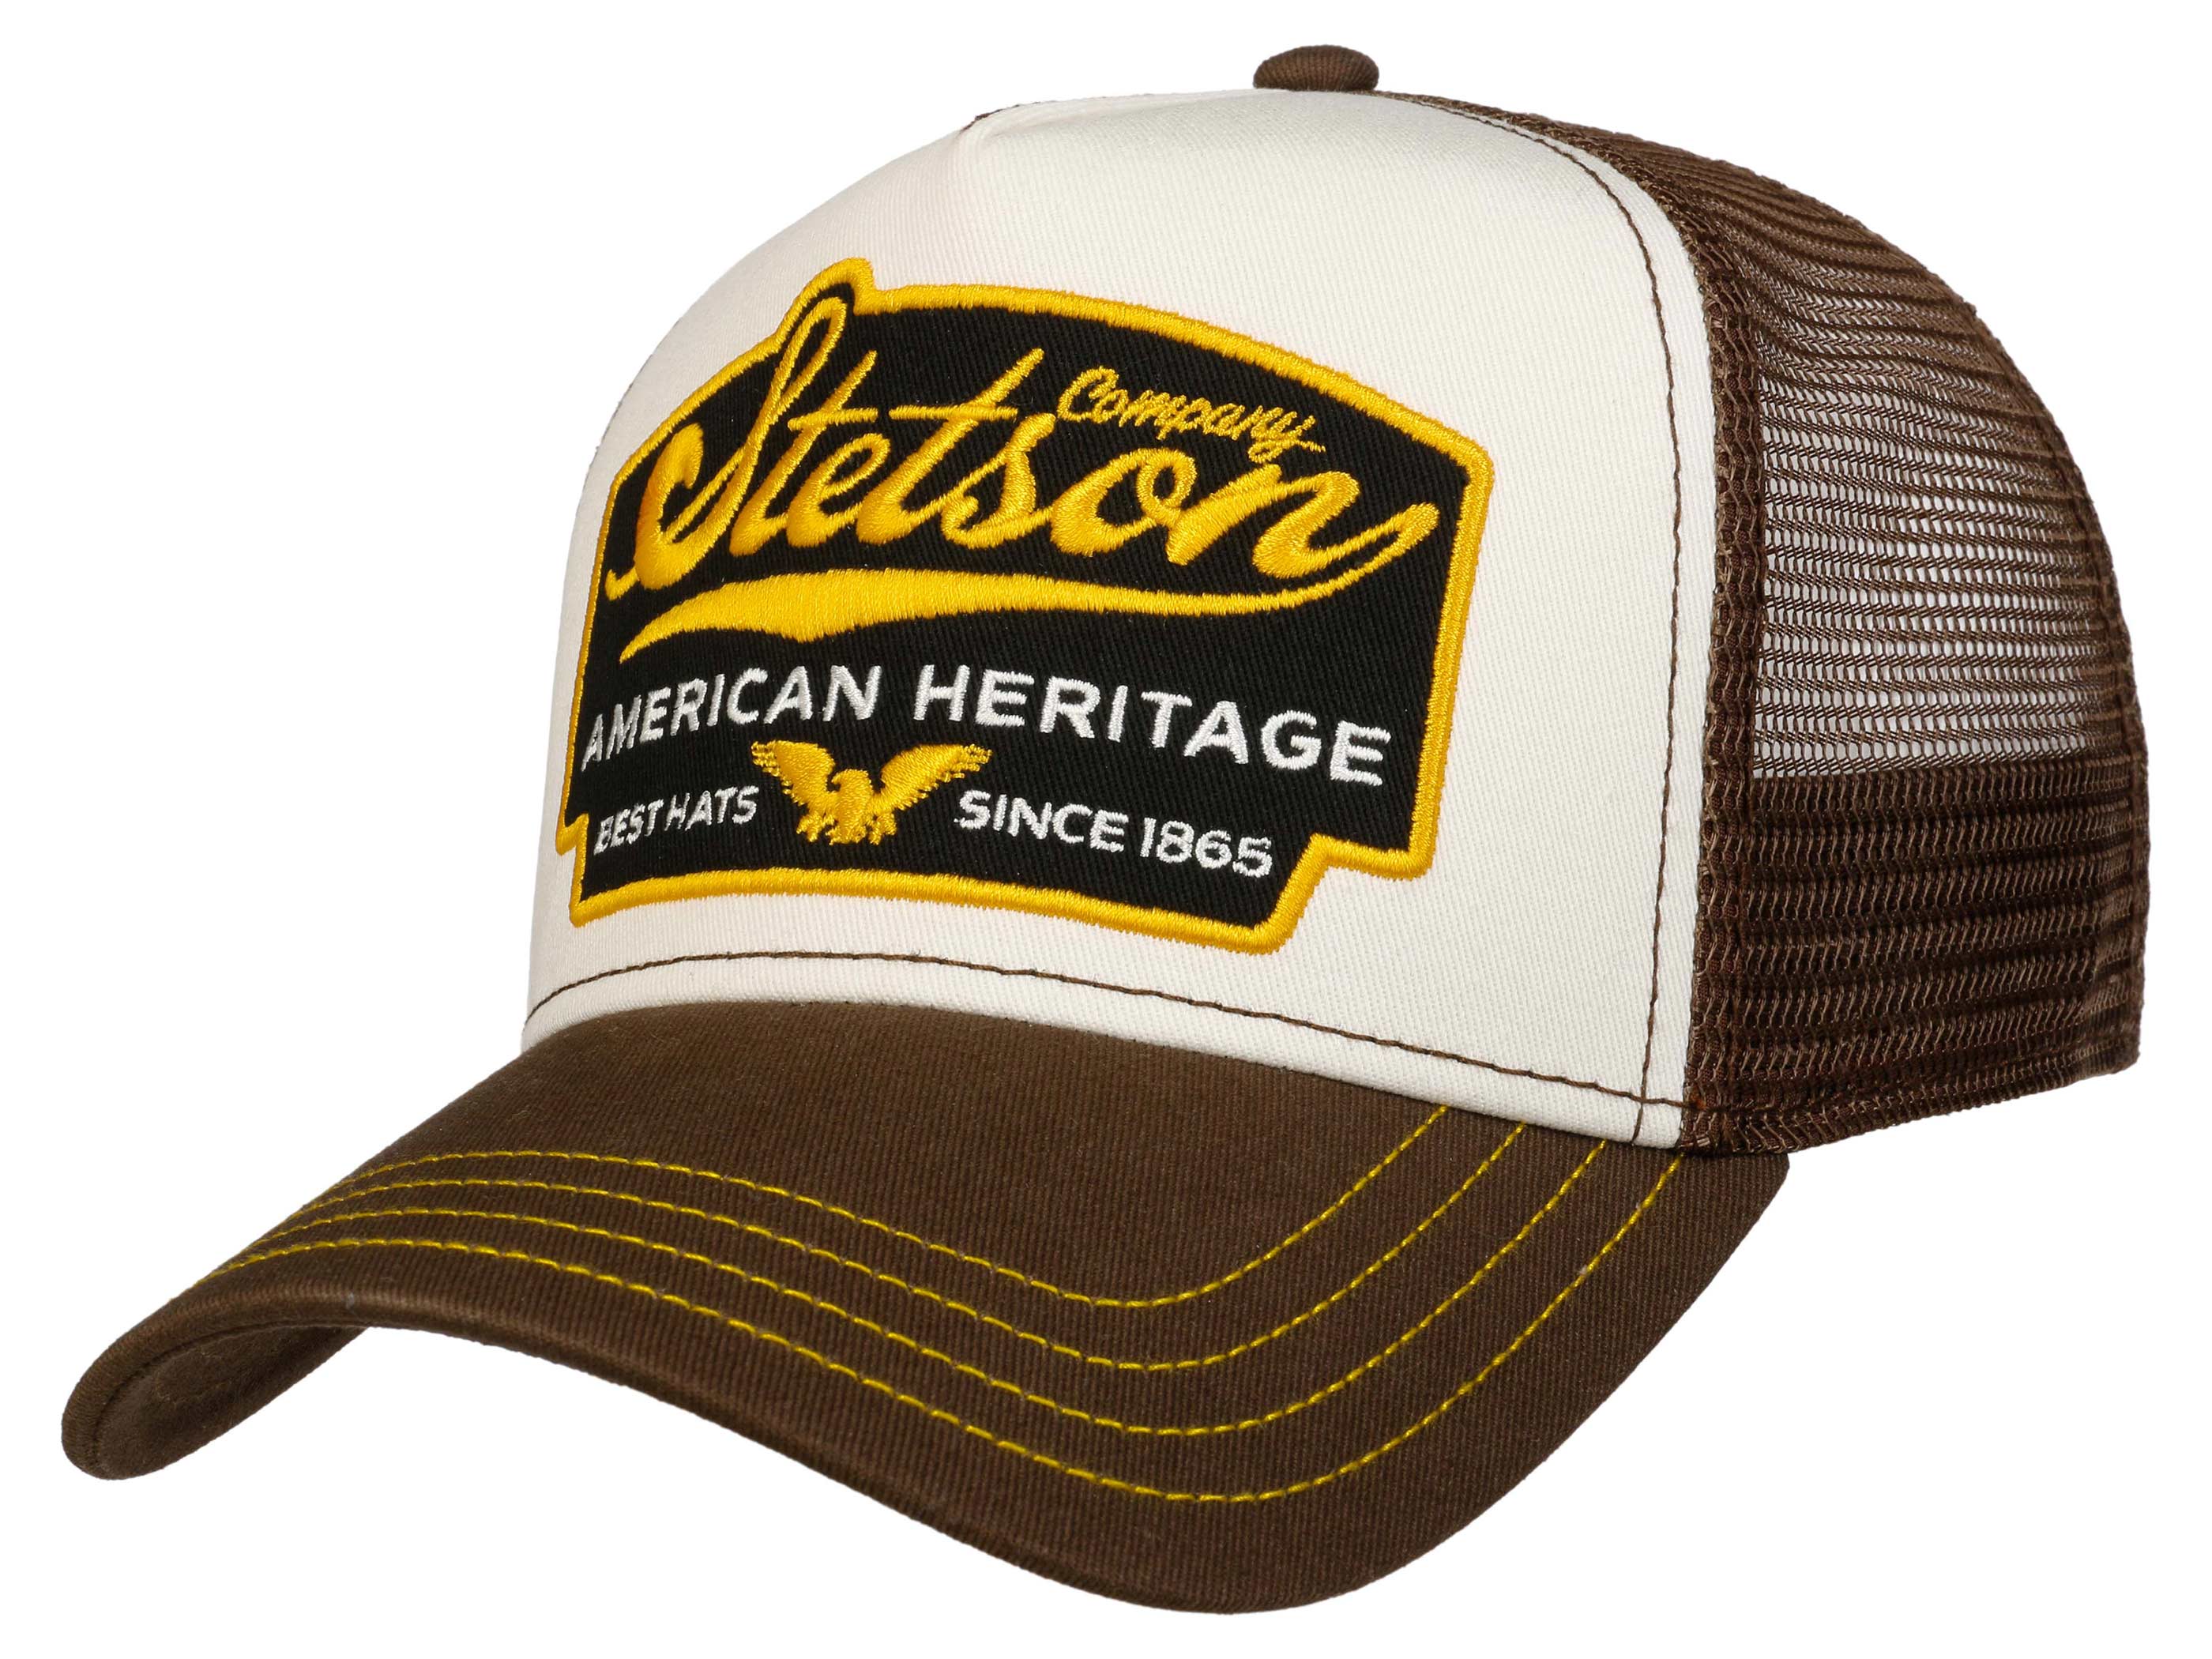 Stetson Trucker Cap American Heritage